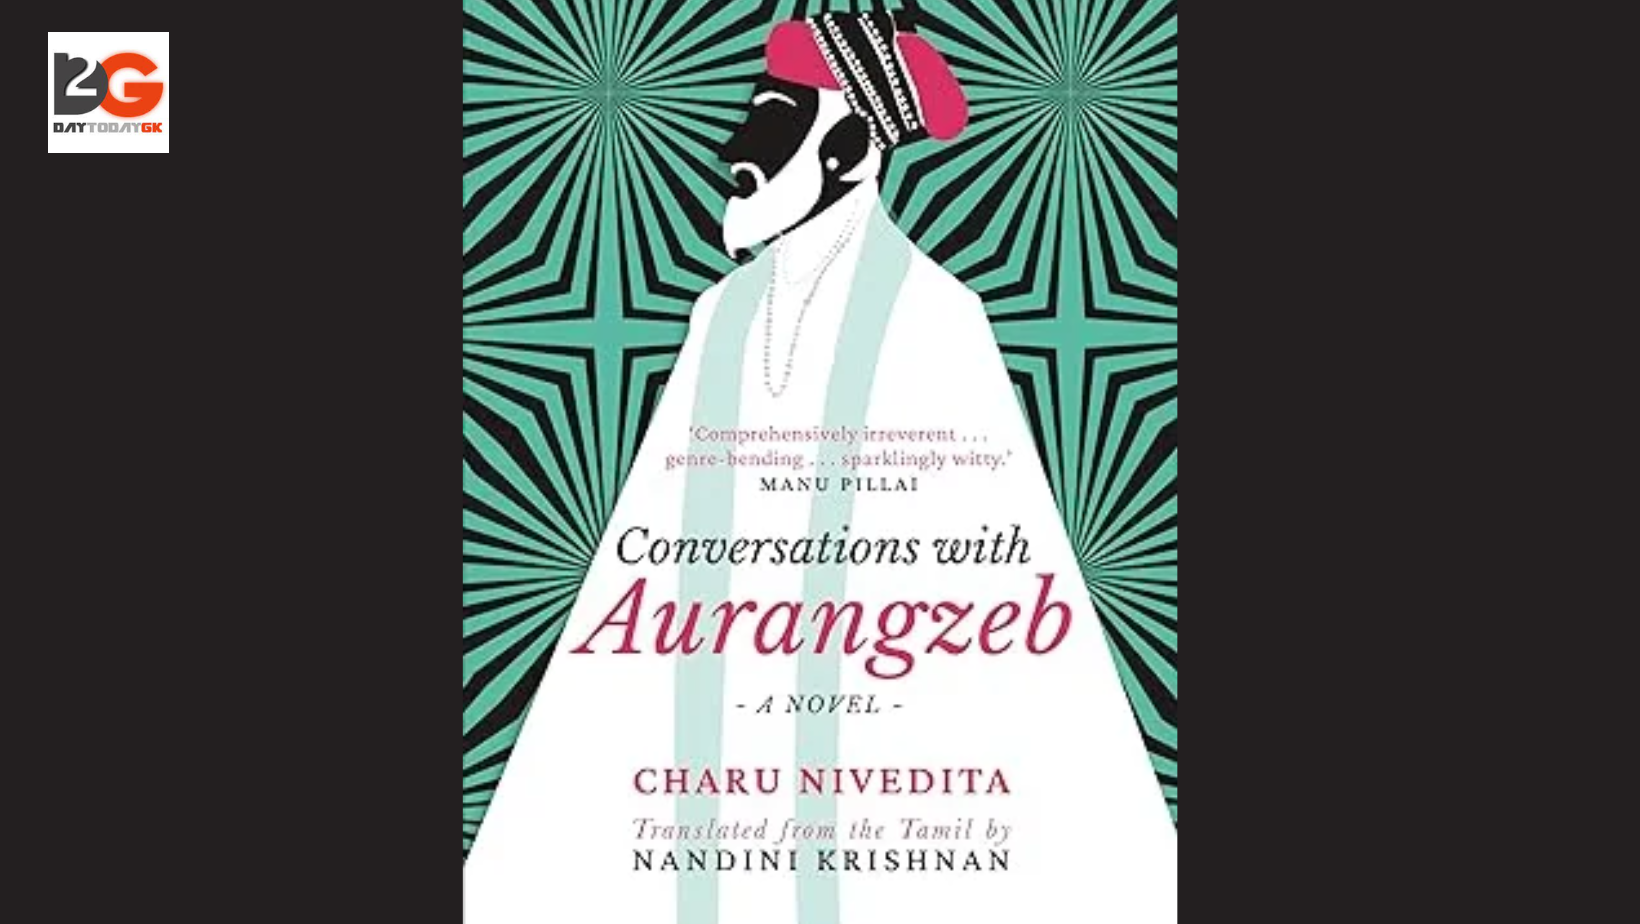 Conversations with Aurangzeb”: A Novel by Charu Nivedita